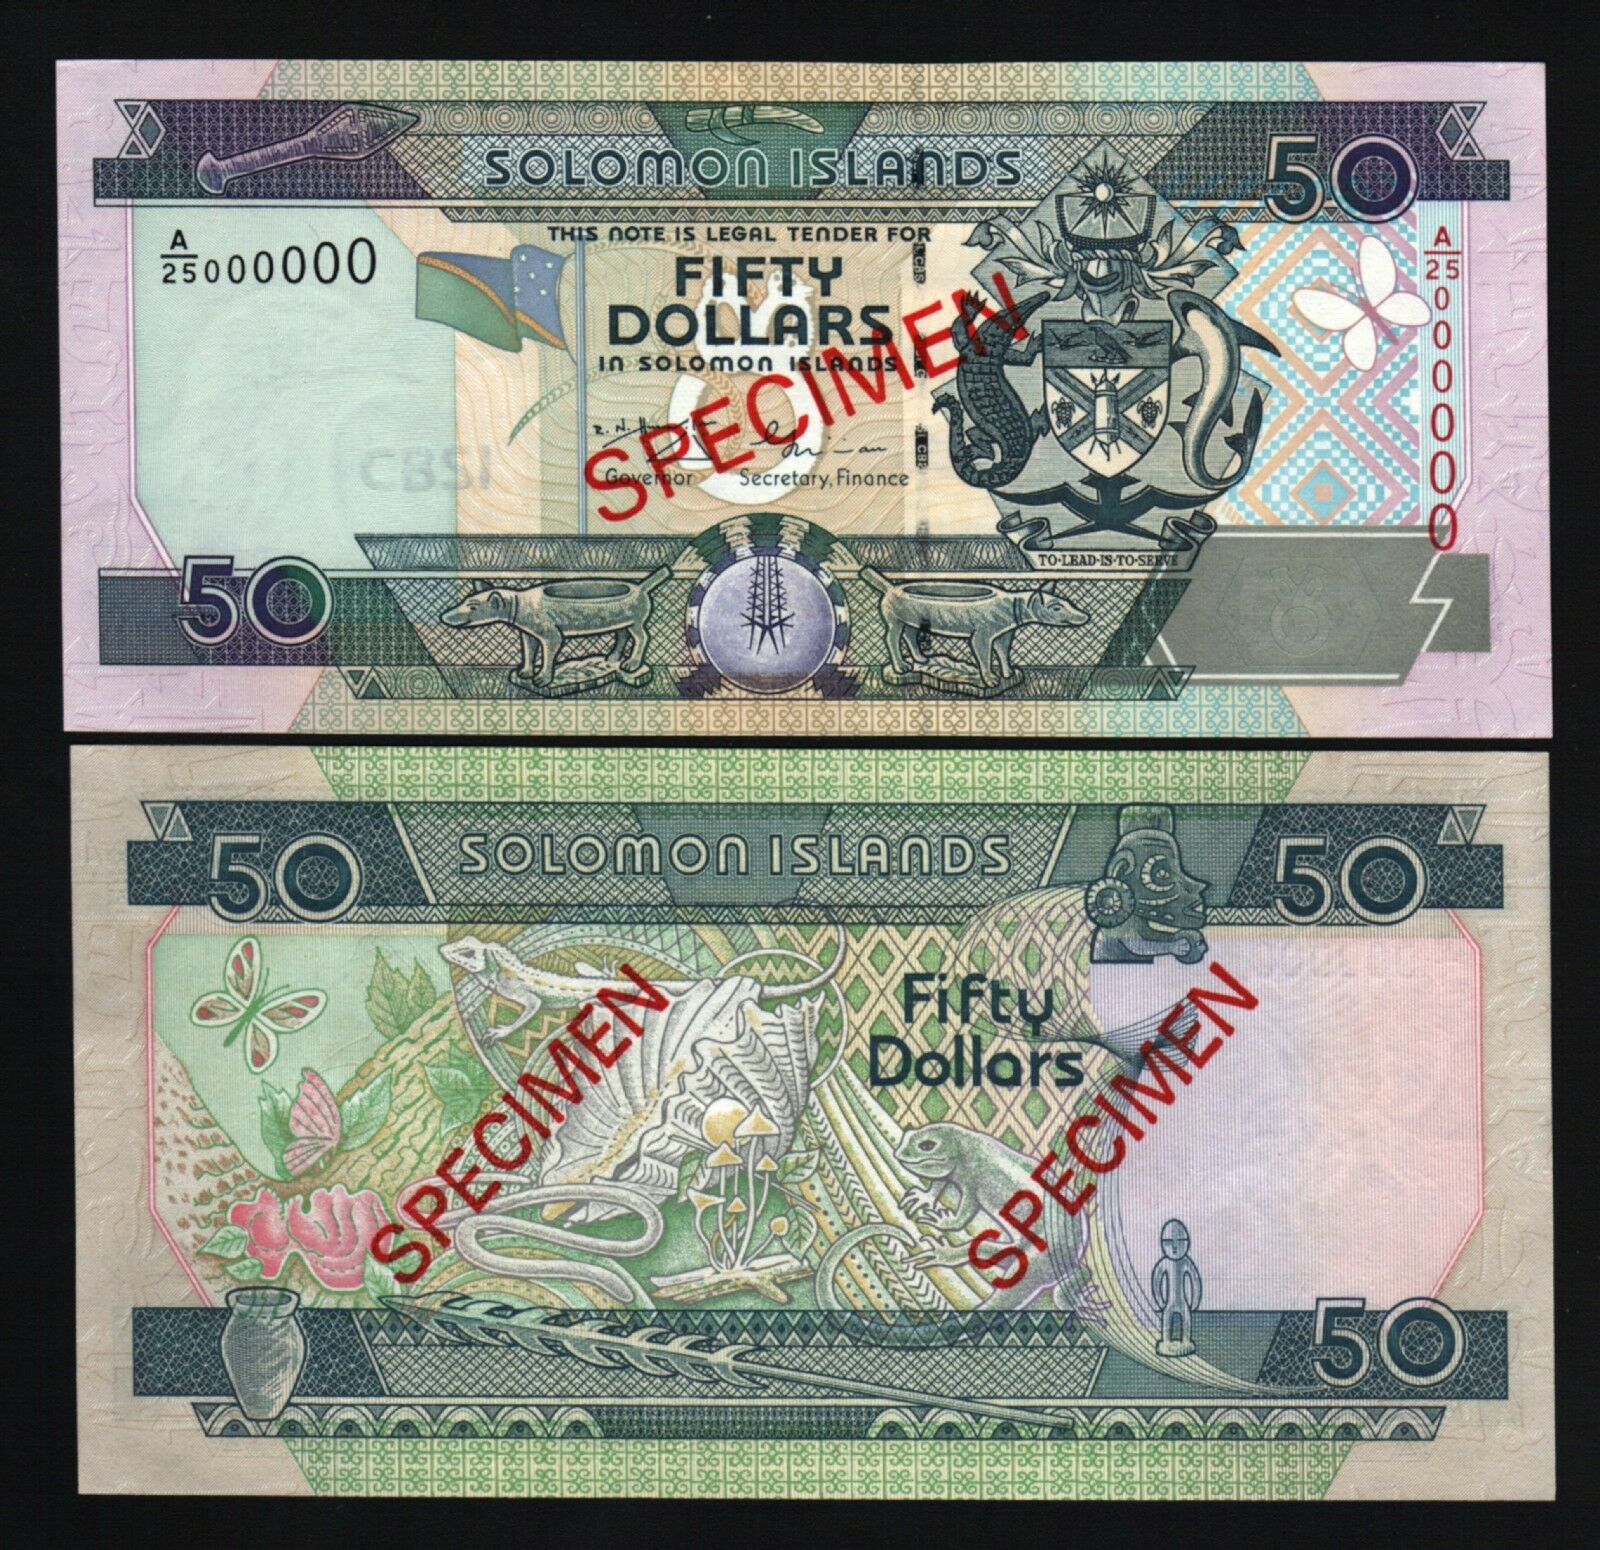 SOLOMON ISLANDS 50 DOLLARS P24 2001 *SPECIMEN* BUTTERFLY UNC  MONEY BANK NOTE